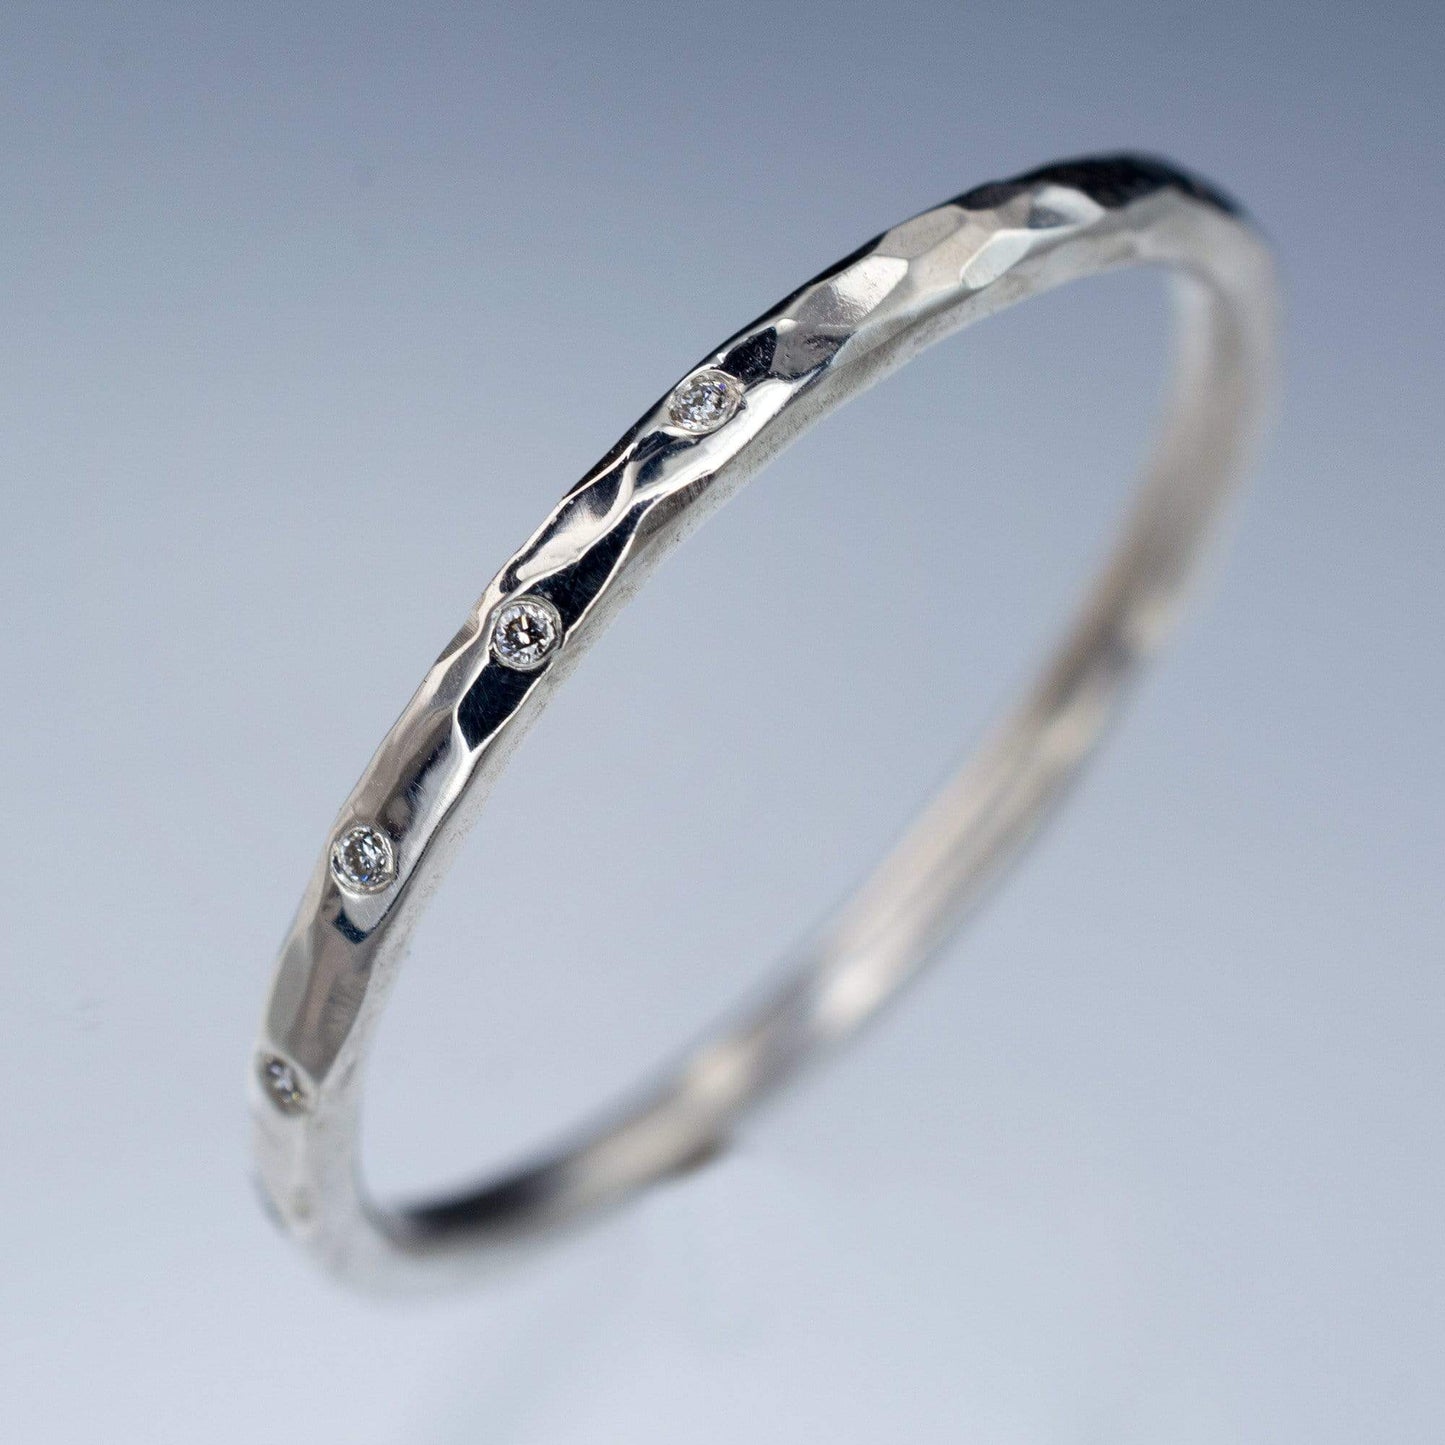 Thin Diamond Wedding Ring Skinny Gold Hammered Texture Wedding Band 1.5mm wide / 14kX1 Nickel White Gold / 5 Diamonds Ring by Nodeform